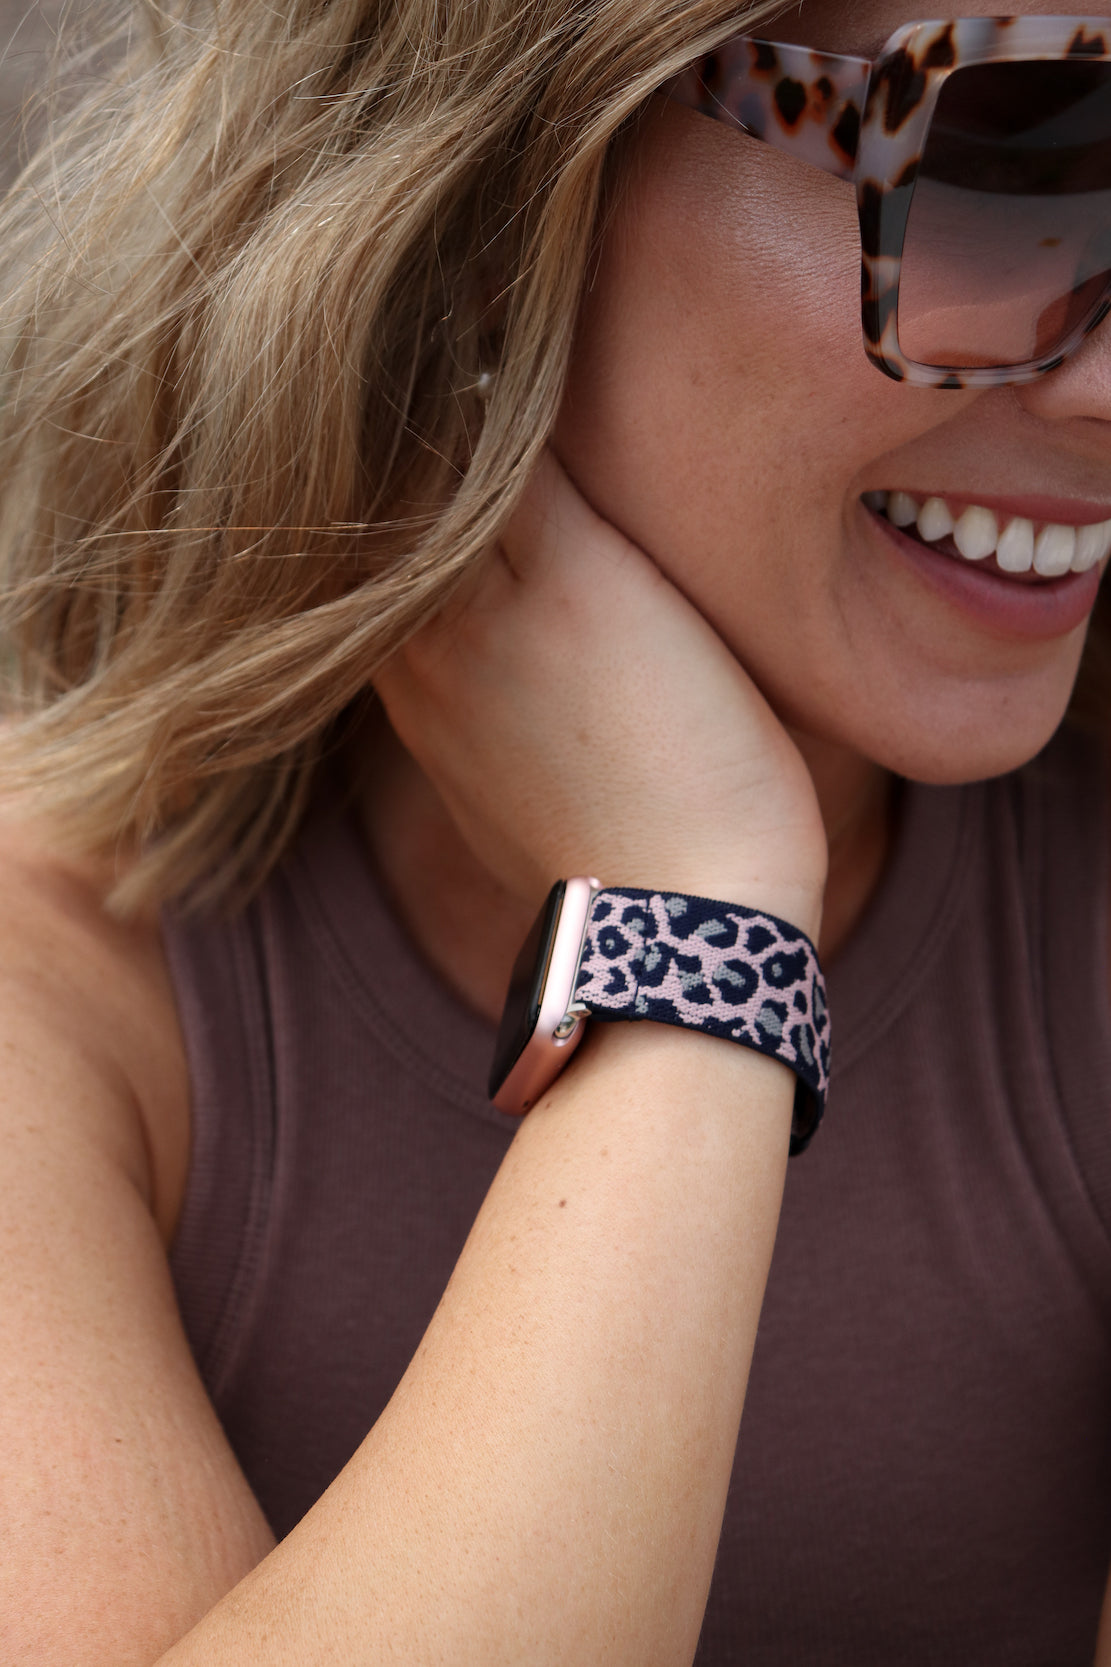 Pink Cheetah Adjustable Fabric Apple Watch Band